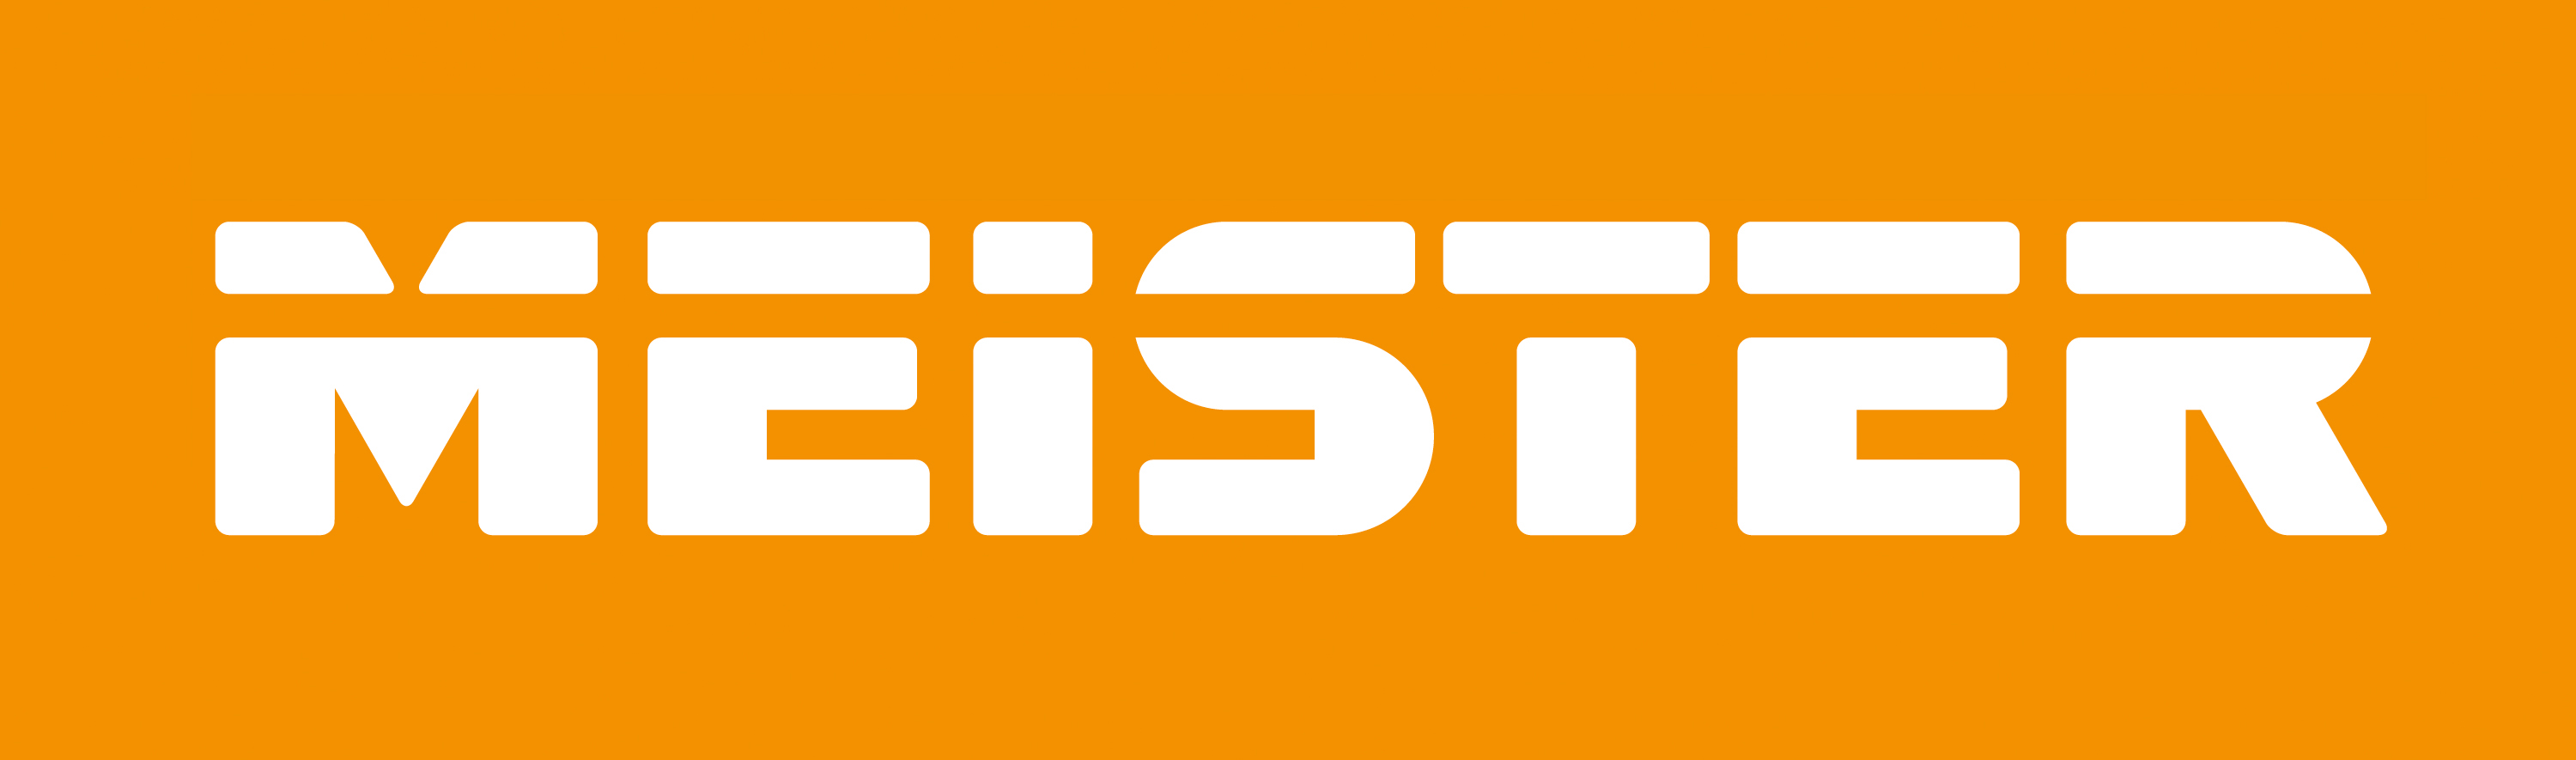 Meister_logo_mattbolaget